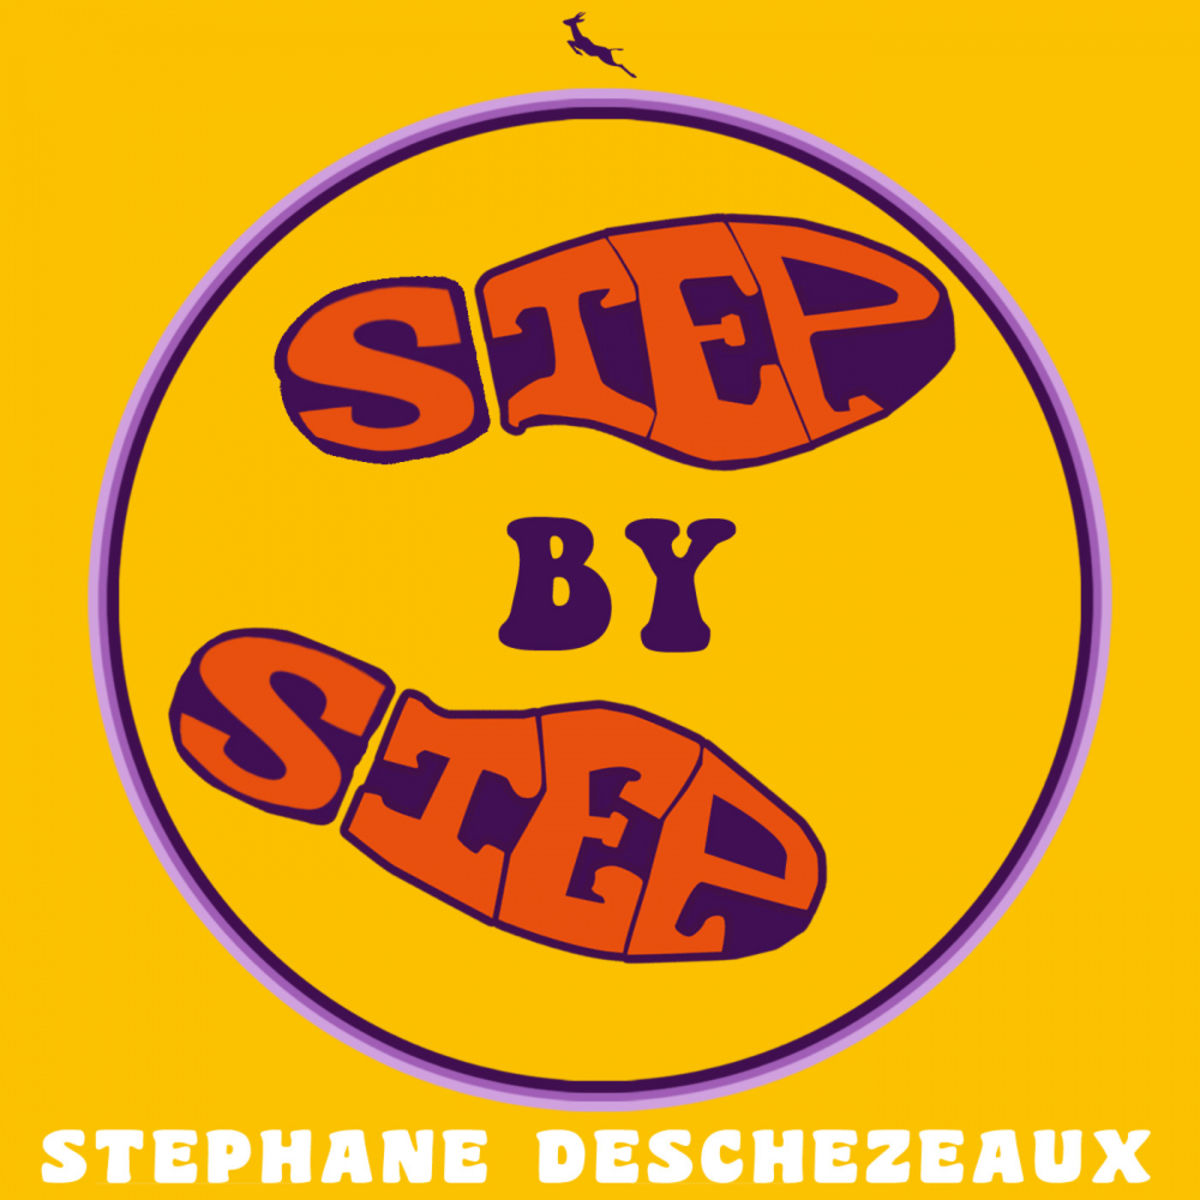 Stephane deschezeaux - Step By Step / Springbok Records